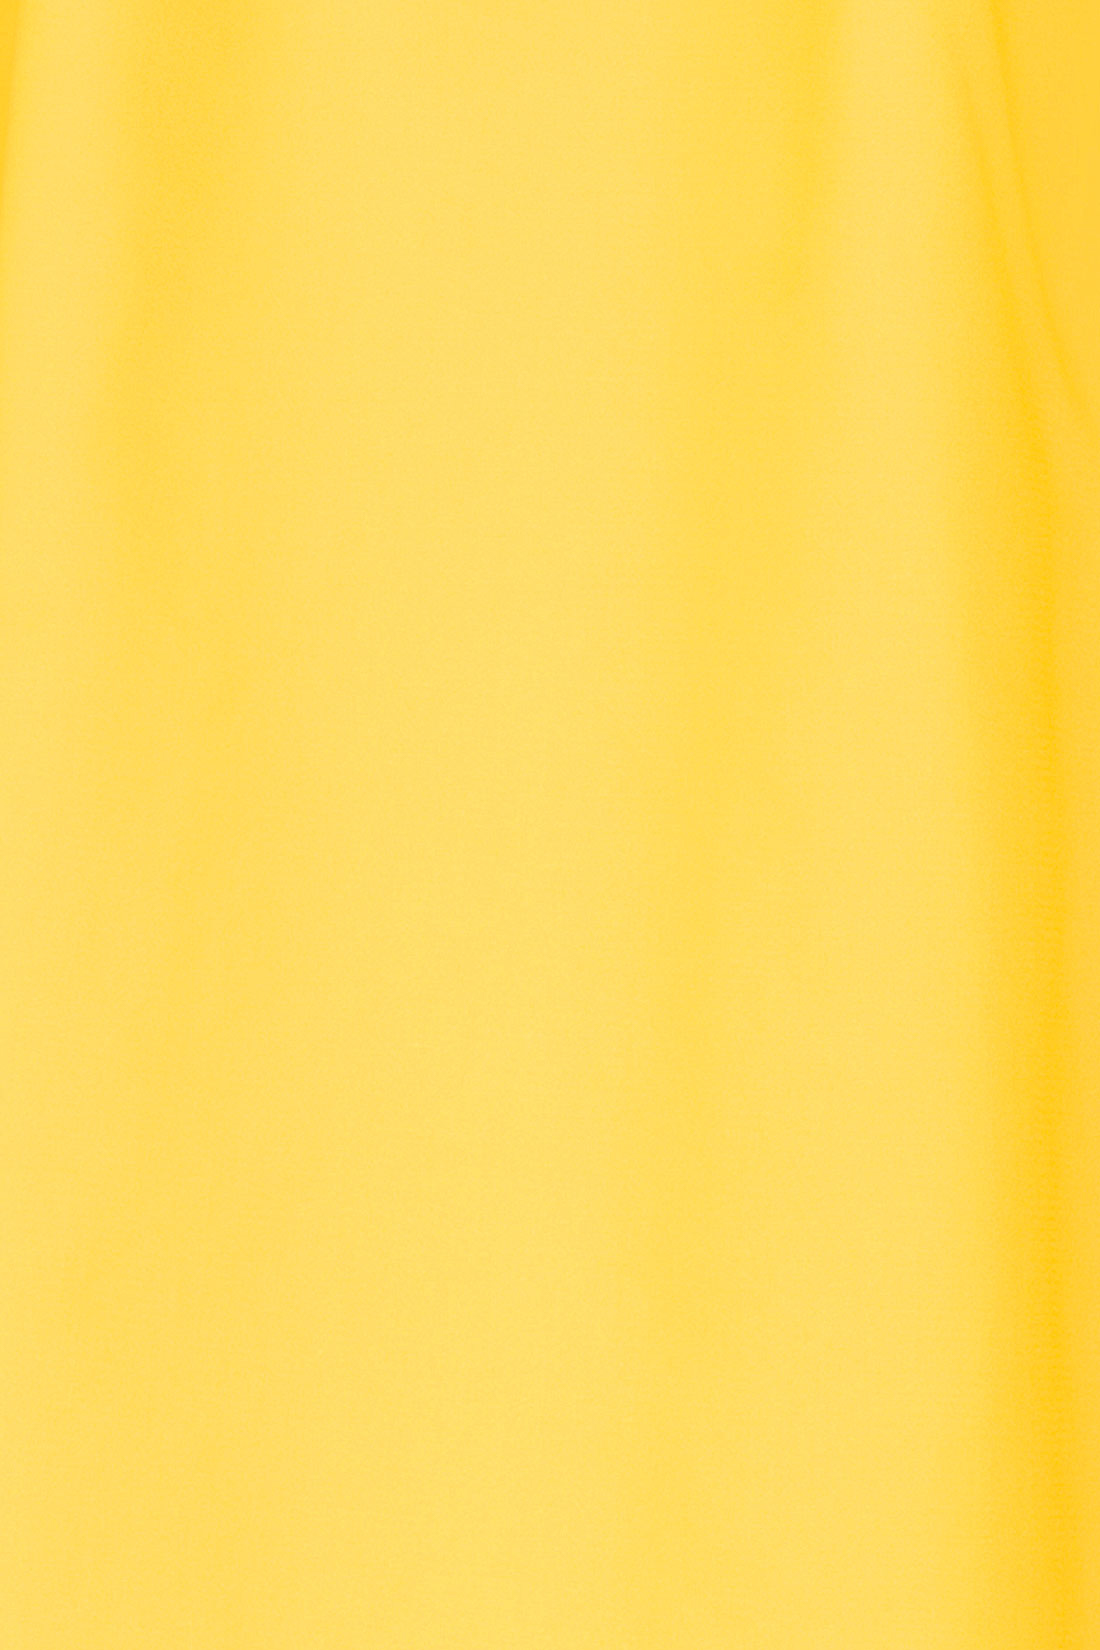 Юбка со складками (арт. baon B477009), размер L, цвет желтый Юбка со складками (арт. baon B477009) - фото 3